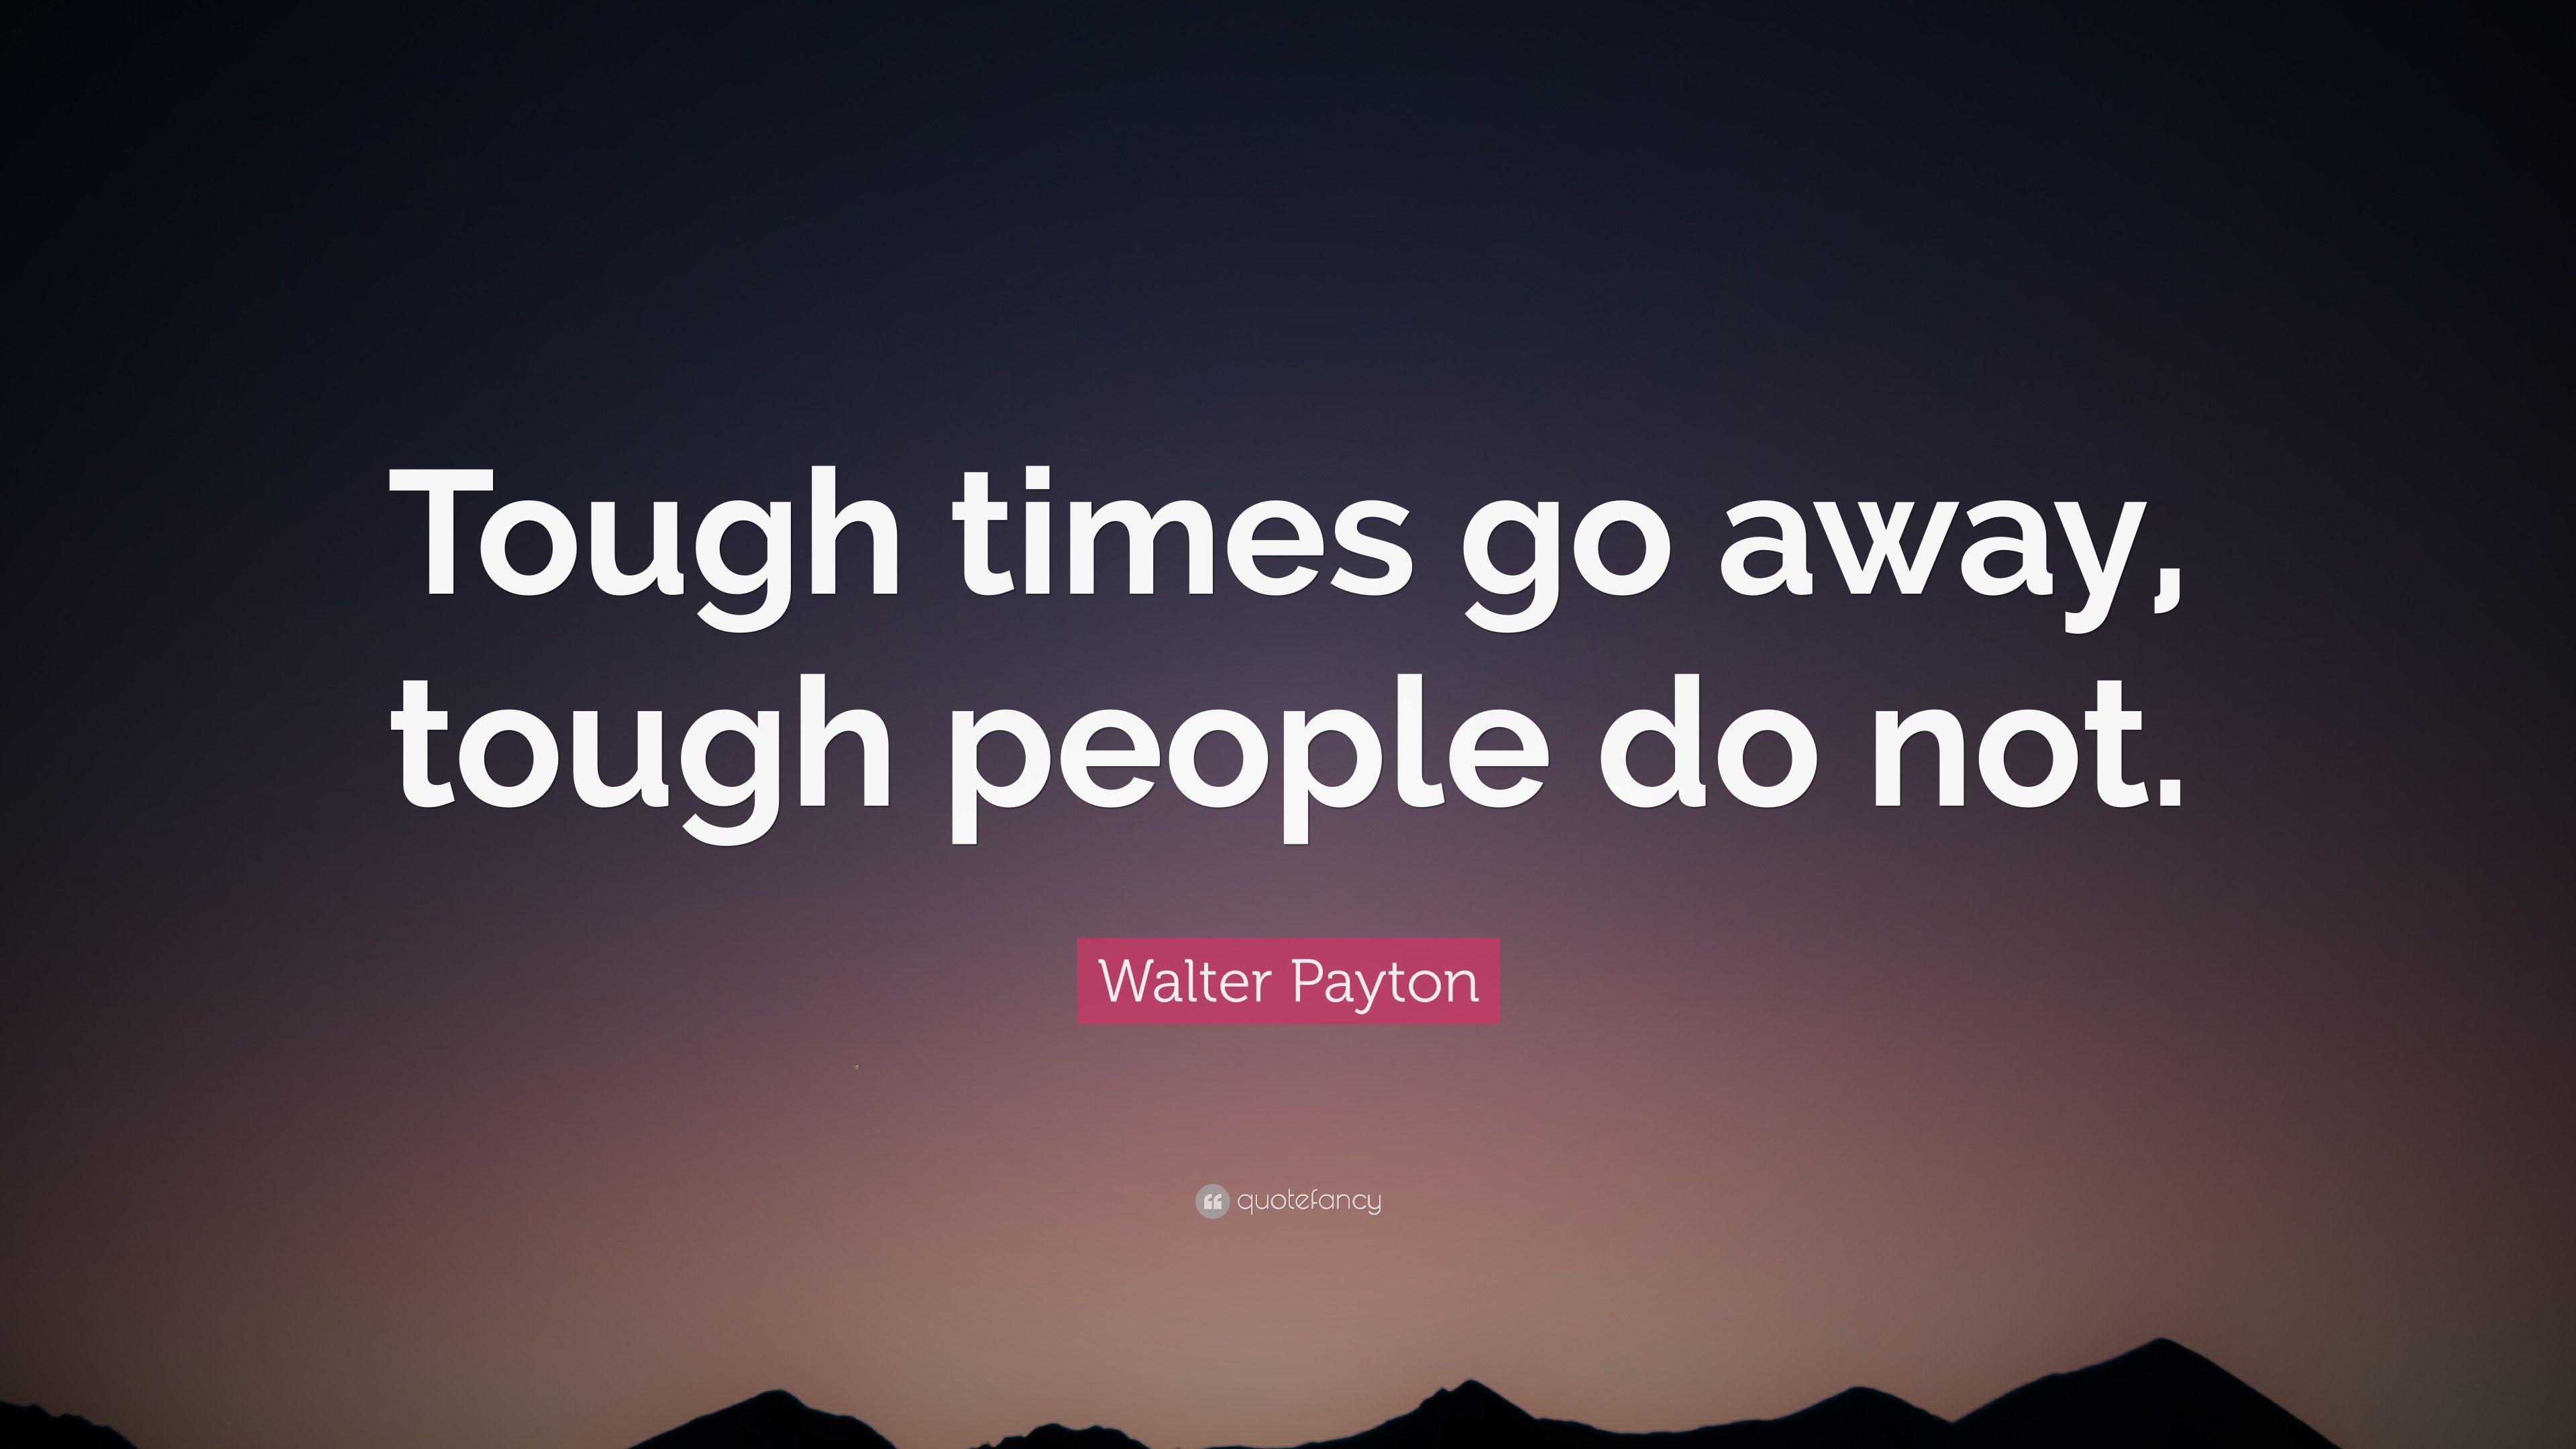 Walter Payton Quote: “Tough times go away, tough people do not